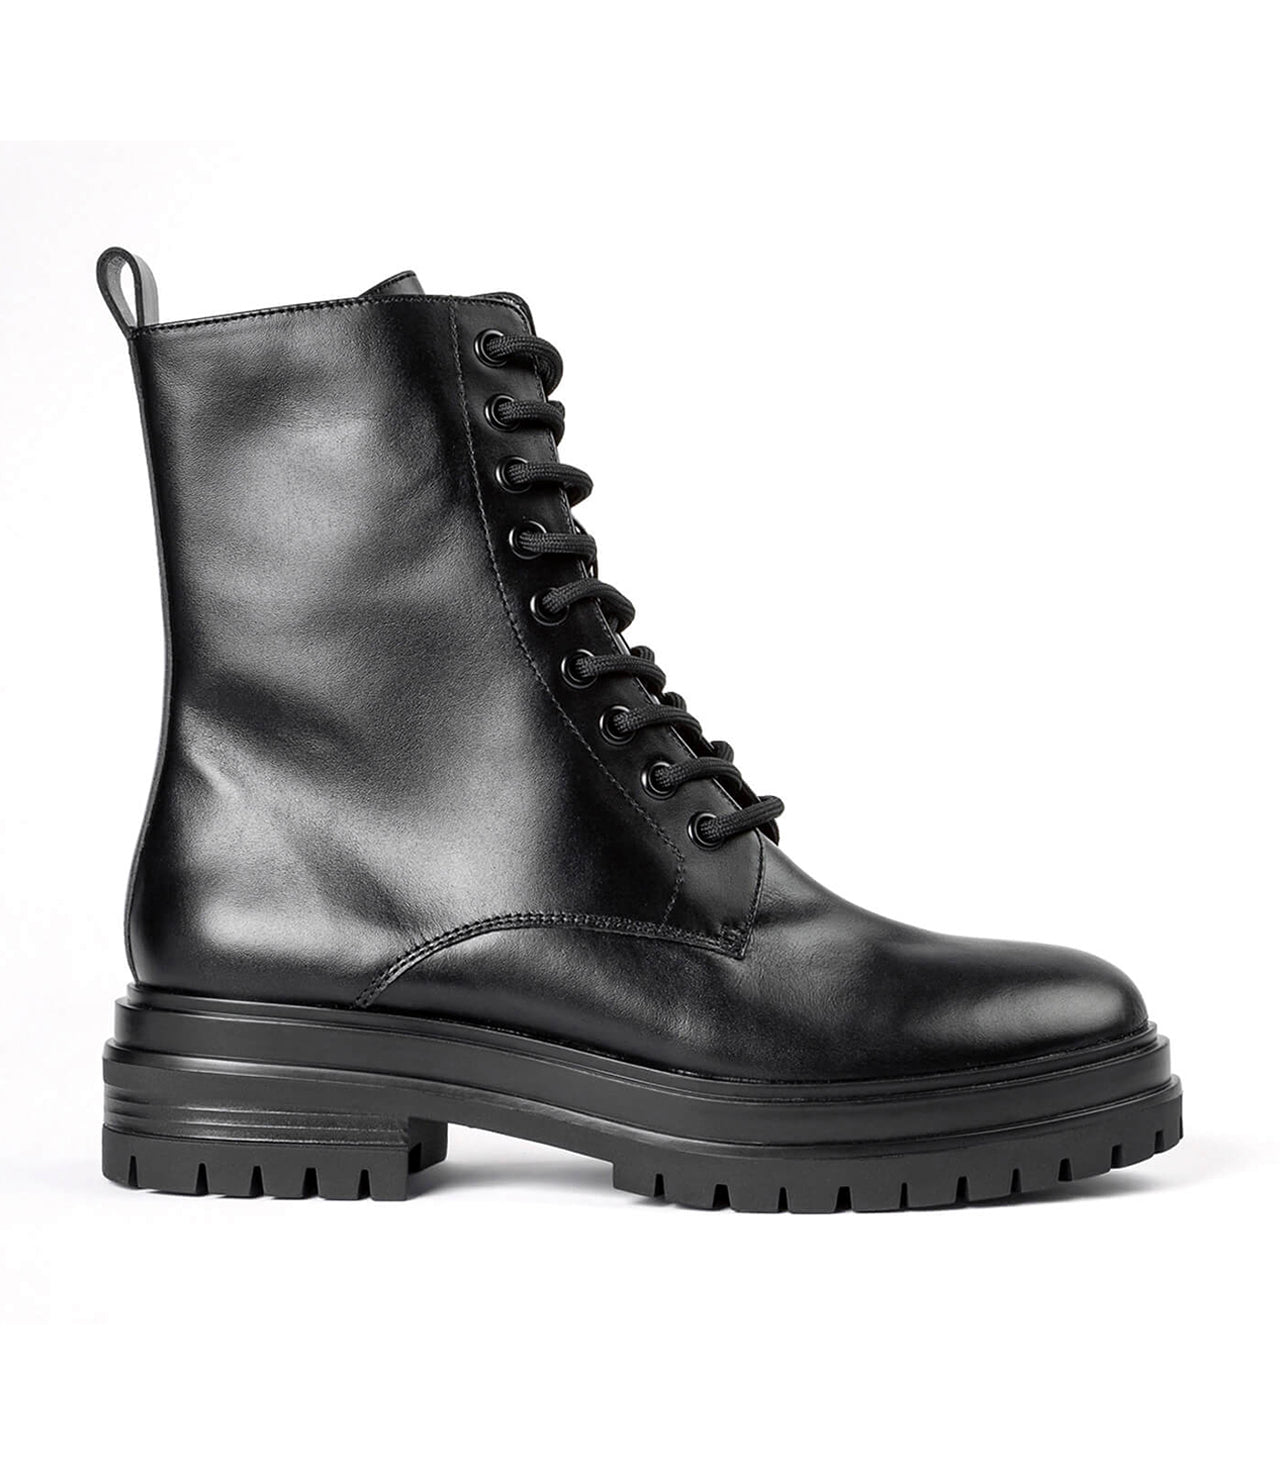 Wya Black Como Ankle Boots | Boots | Tony Bianco USA | Tony Bianco US